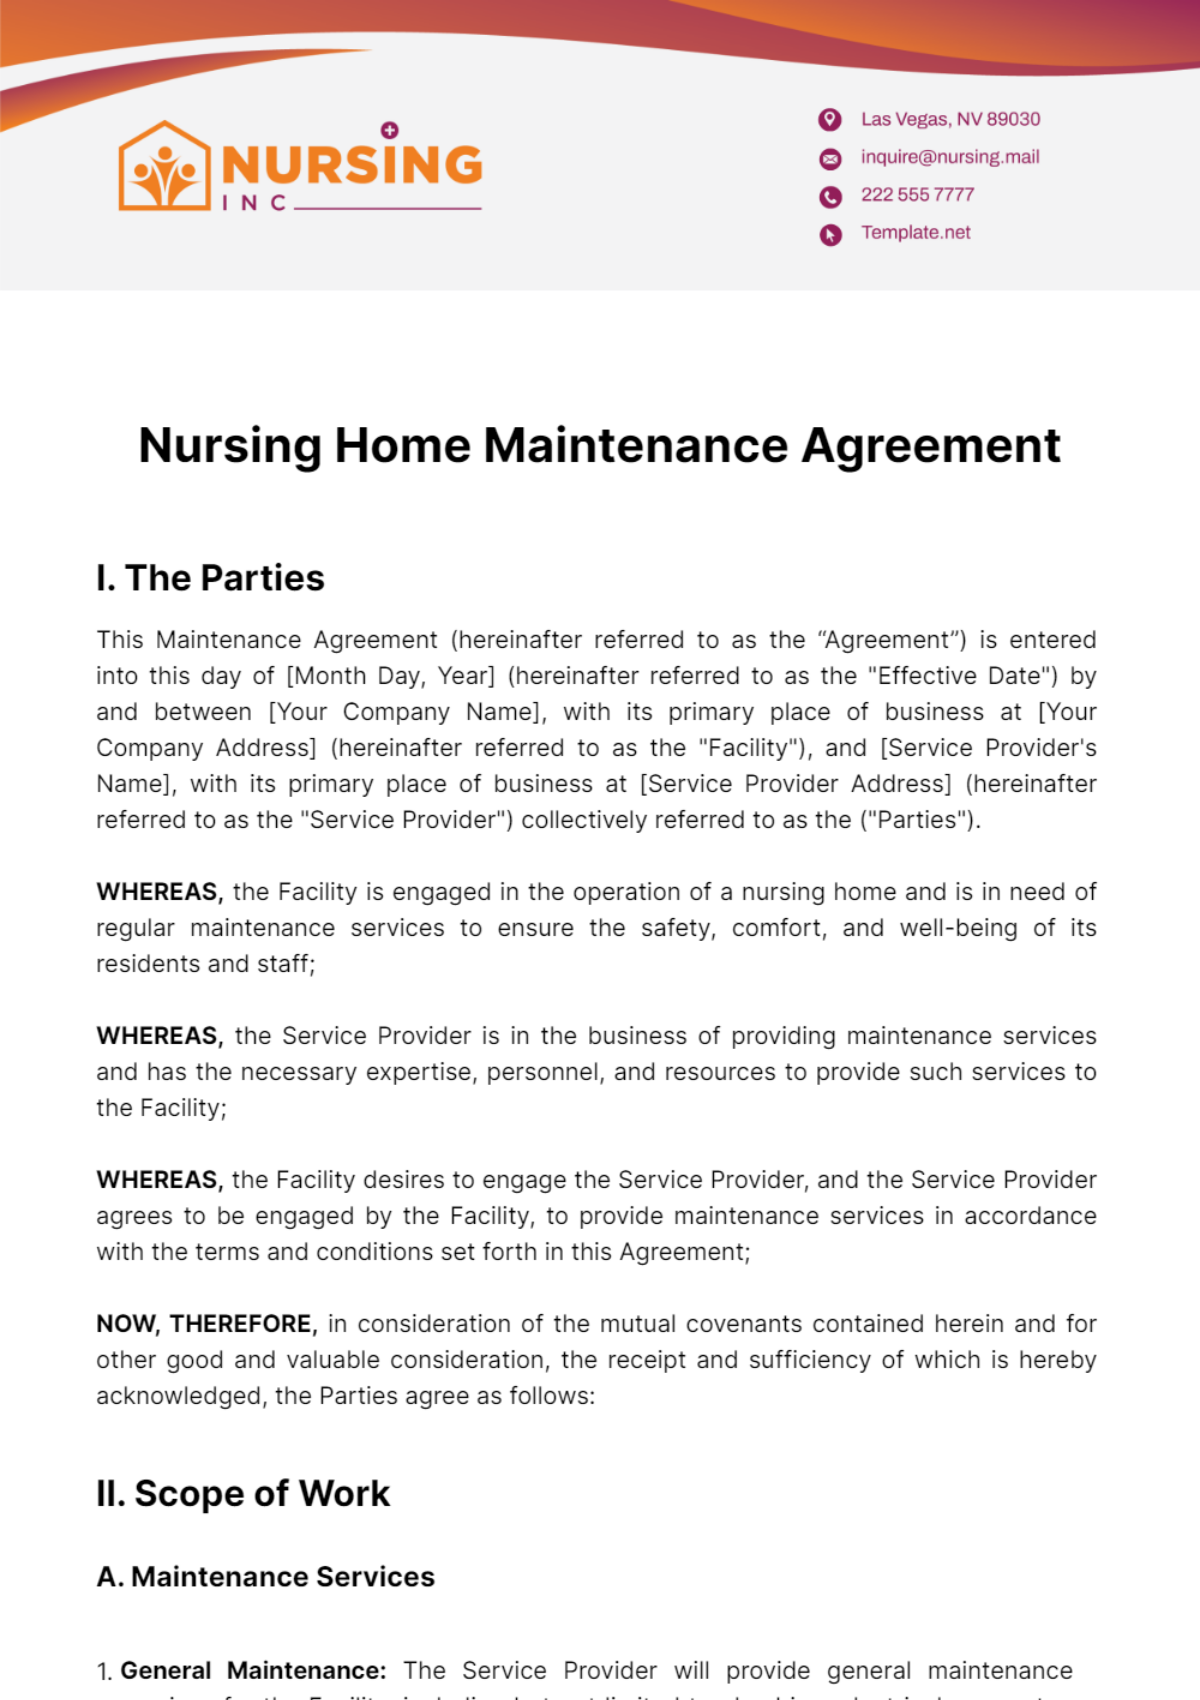 Nursing Home Maintenance Agreement Template